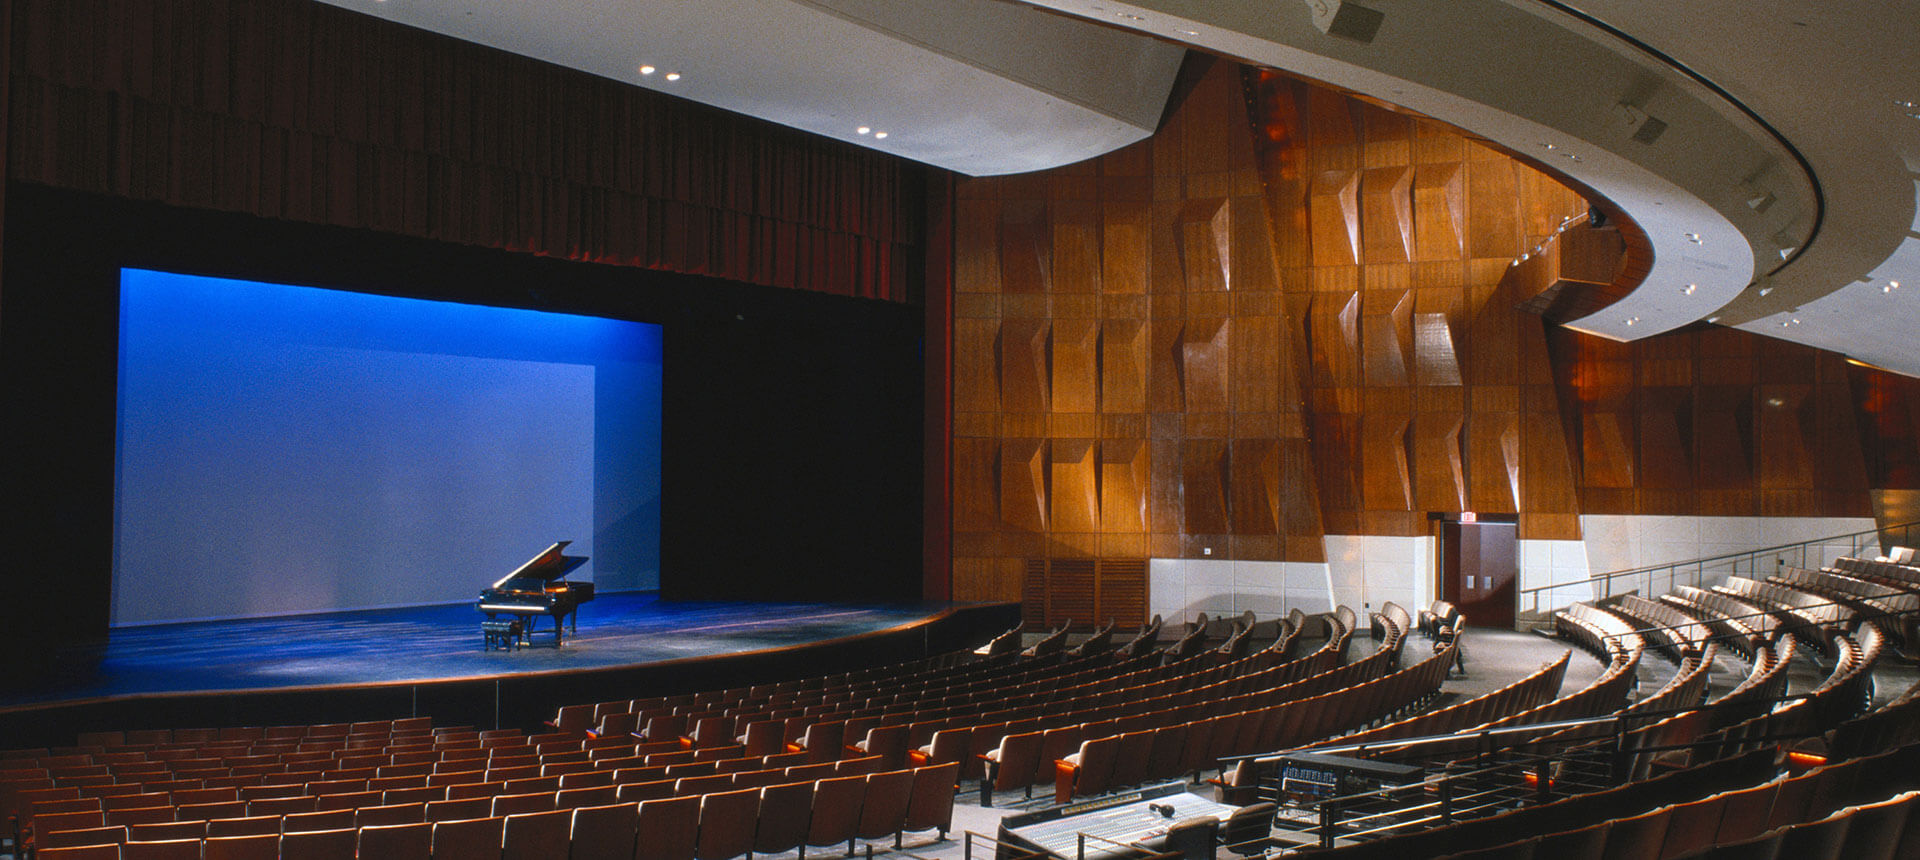 The Charles W. Eisemann Center for Performing Arts CallisonRTKL